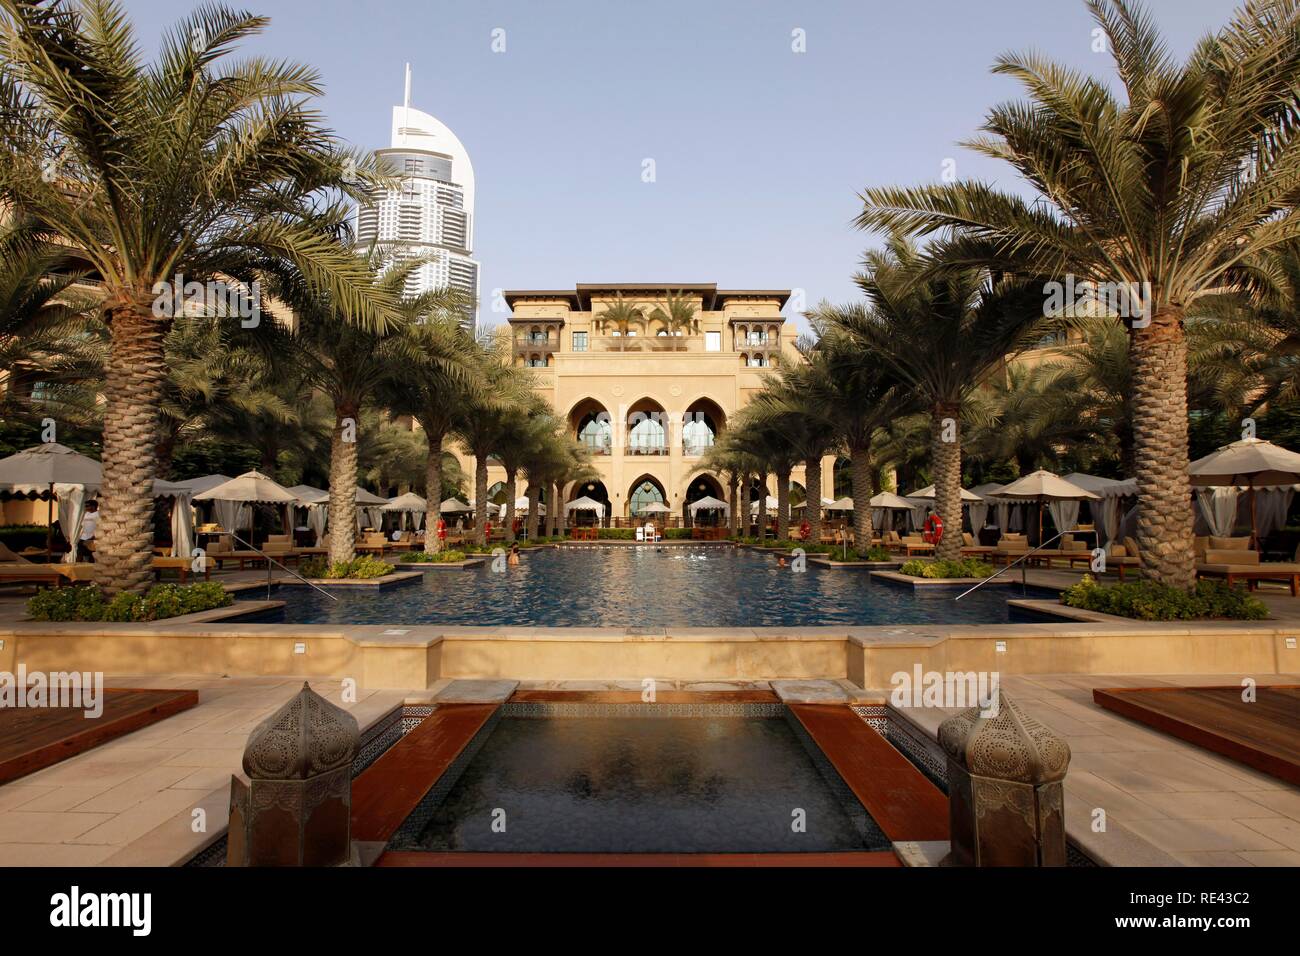 The Palace Hotel, Oldtown Dubai, Arabian-style luxury hotel, part of downtown Dubai, United Arab Emirates, Middle East Stock Photo